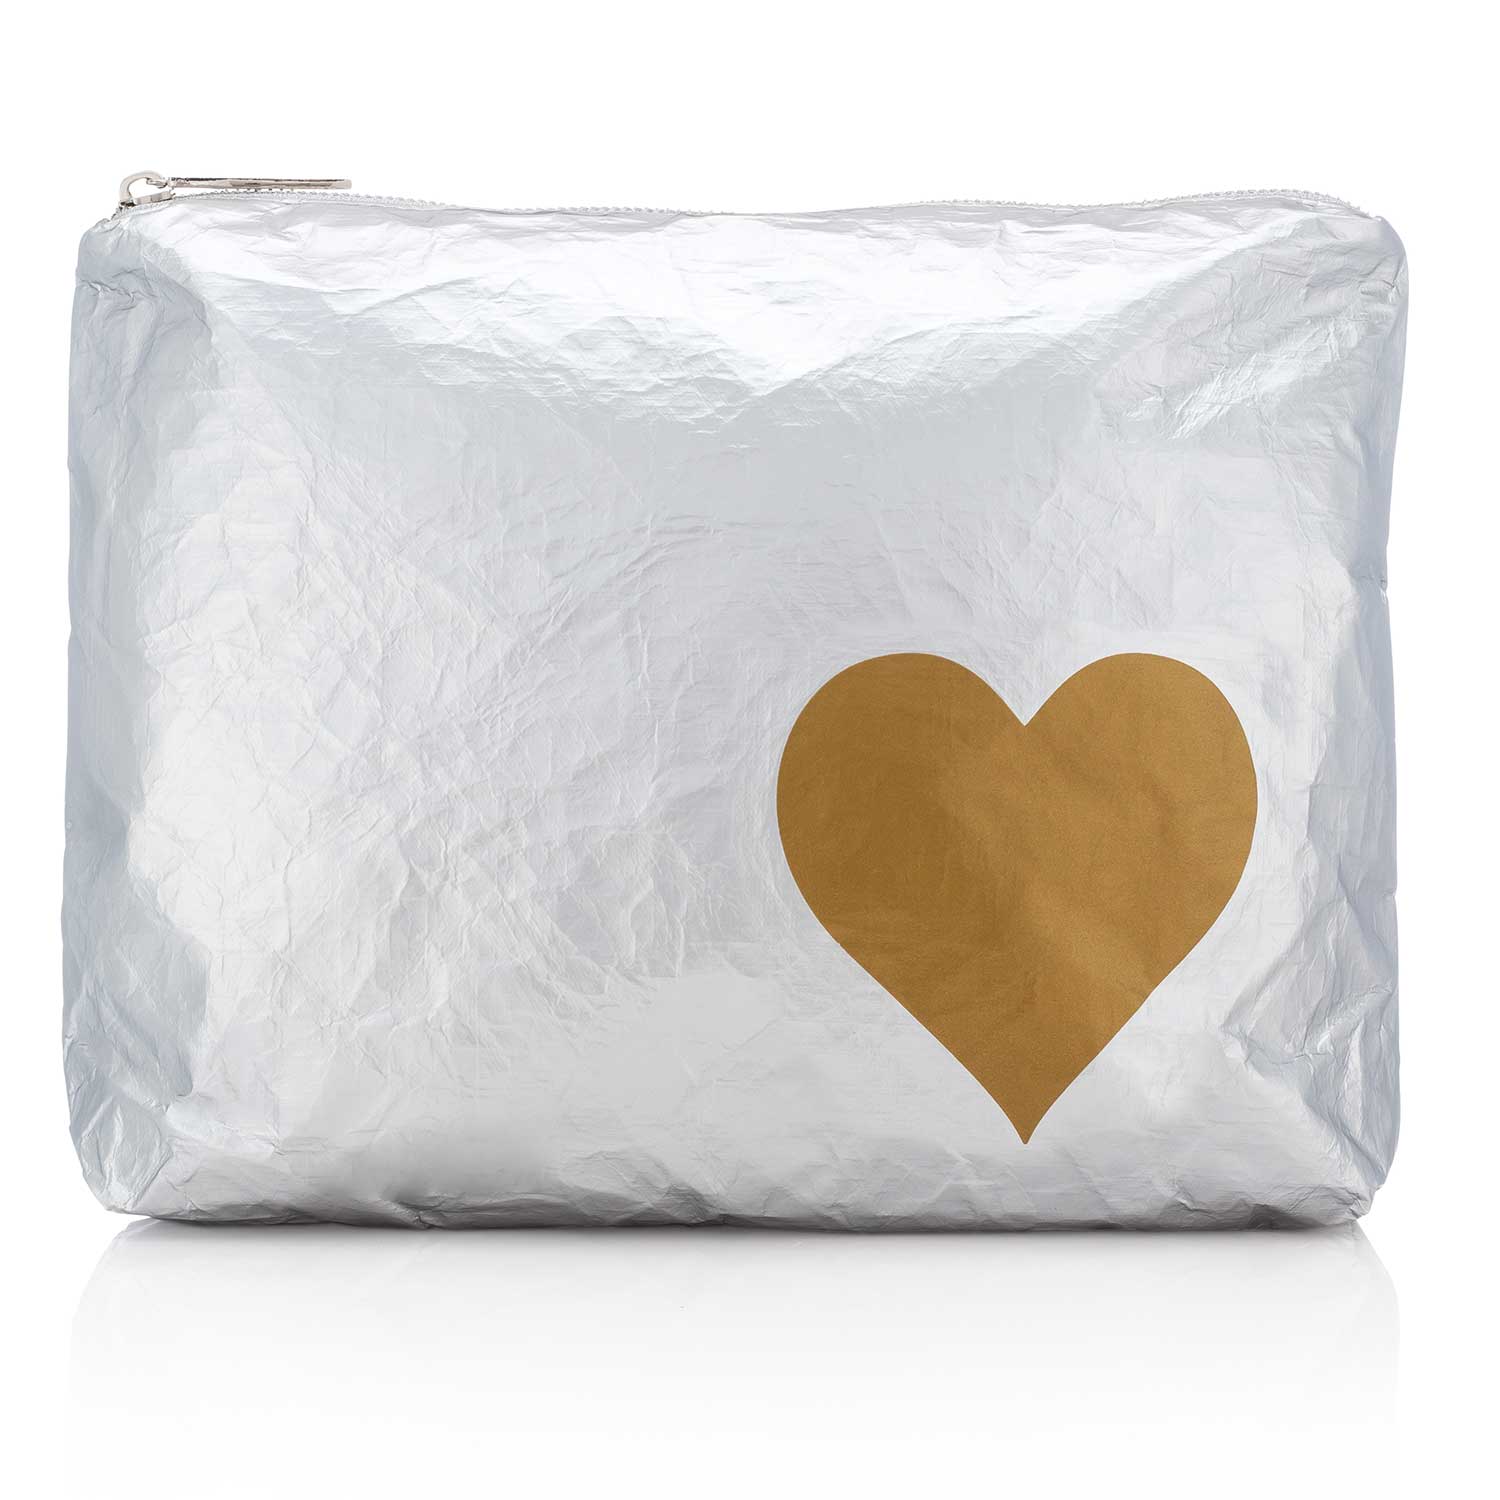 Makeup Pouch - Travel Pack - Medium Pack - Metallic Silver Bag with Metallic Gold Heart